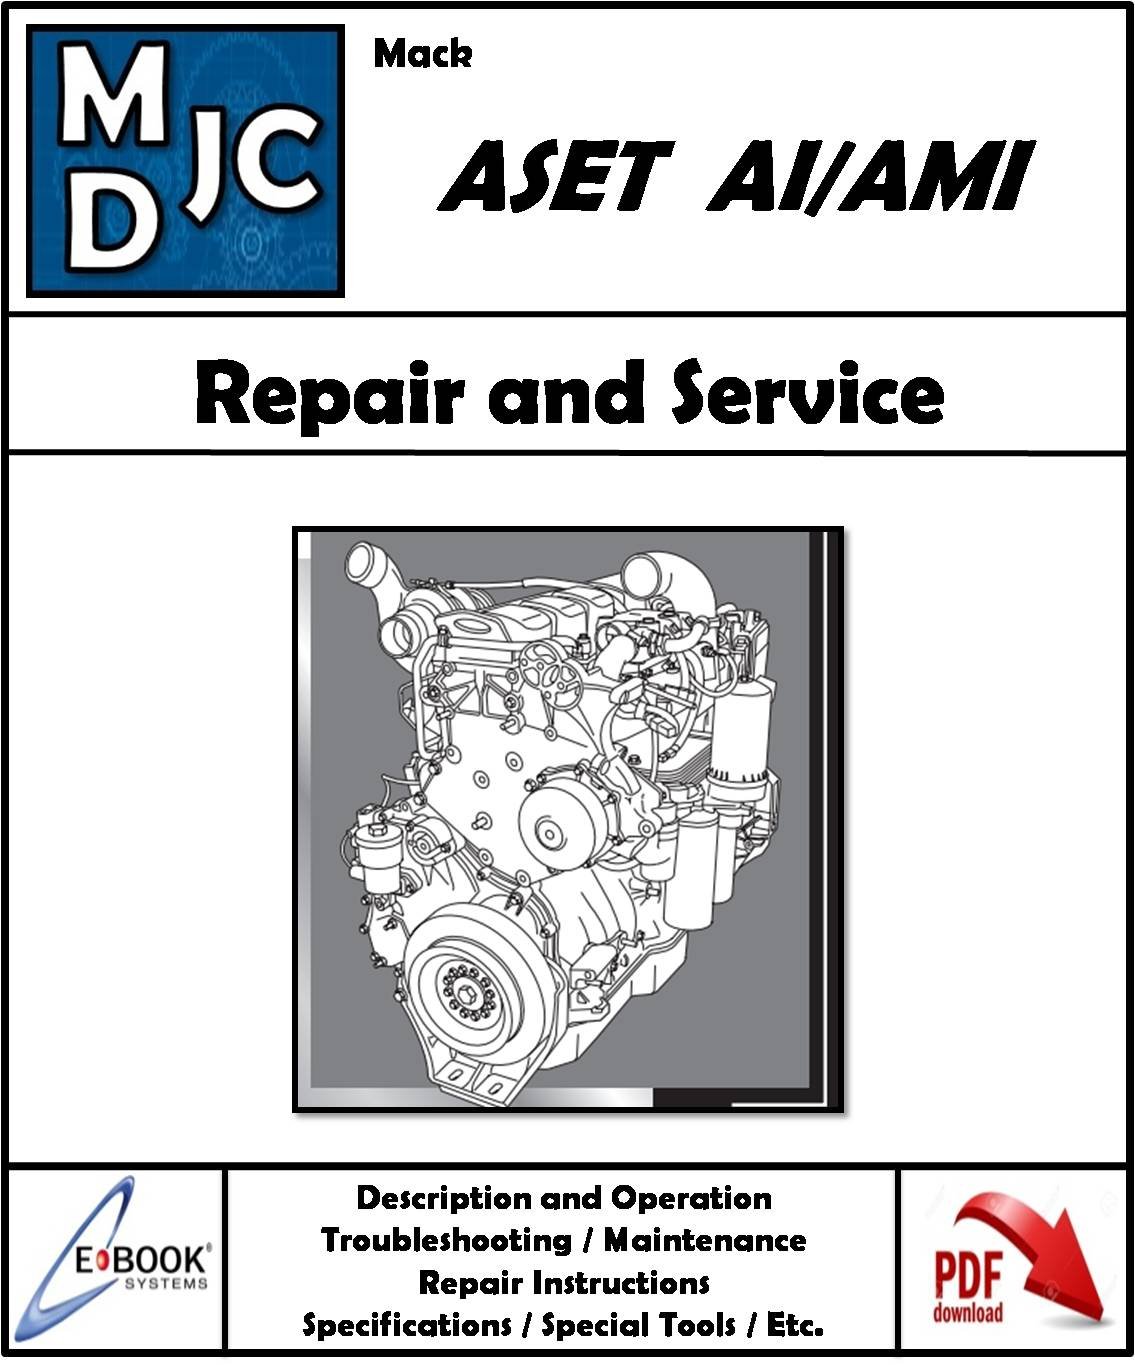 Mack  Aset  AI / AMI  Motores